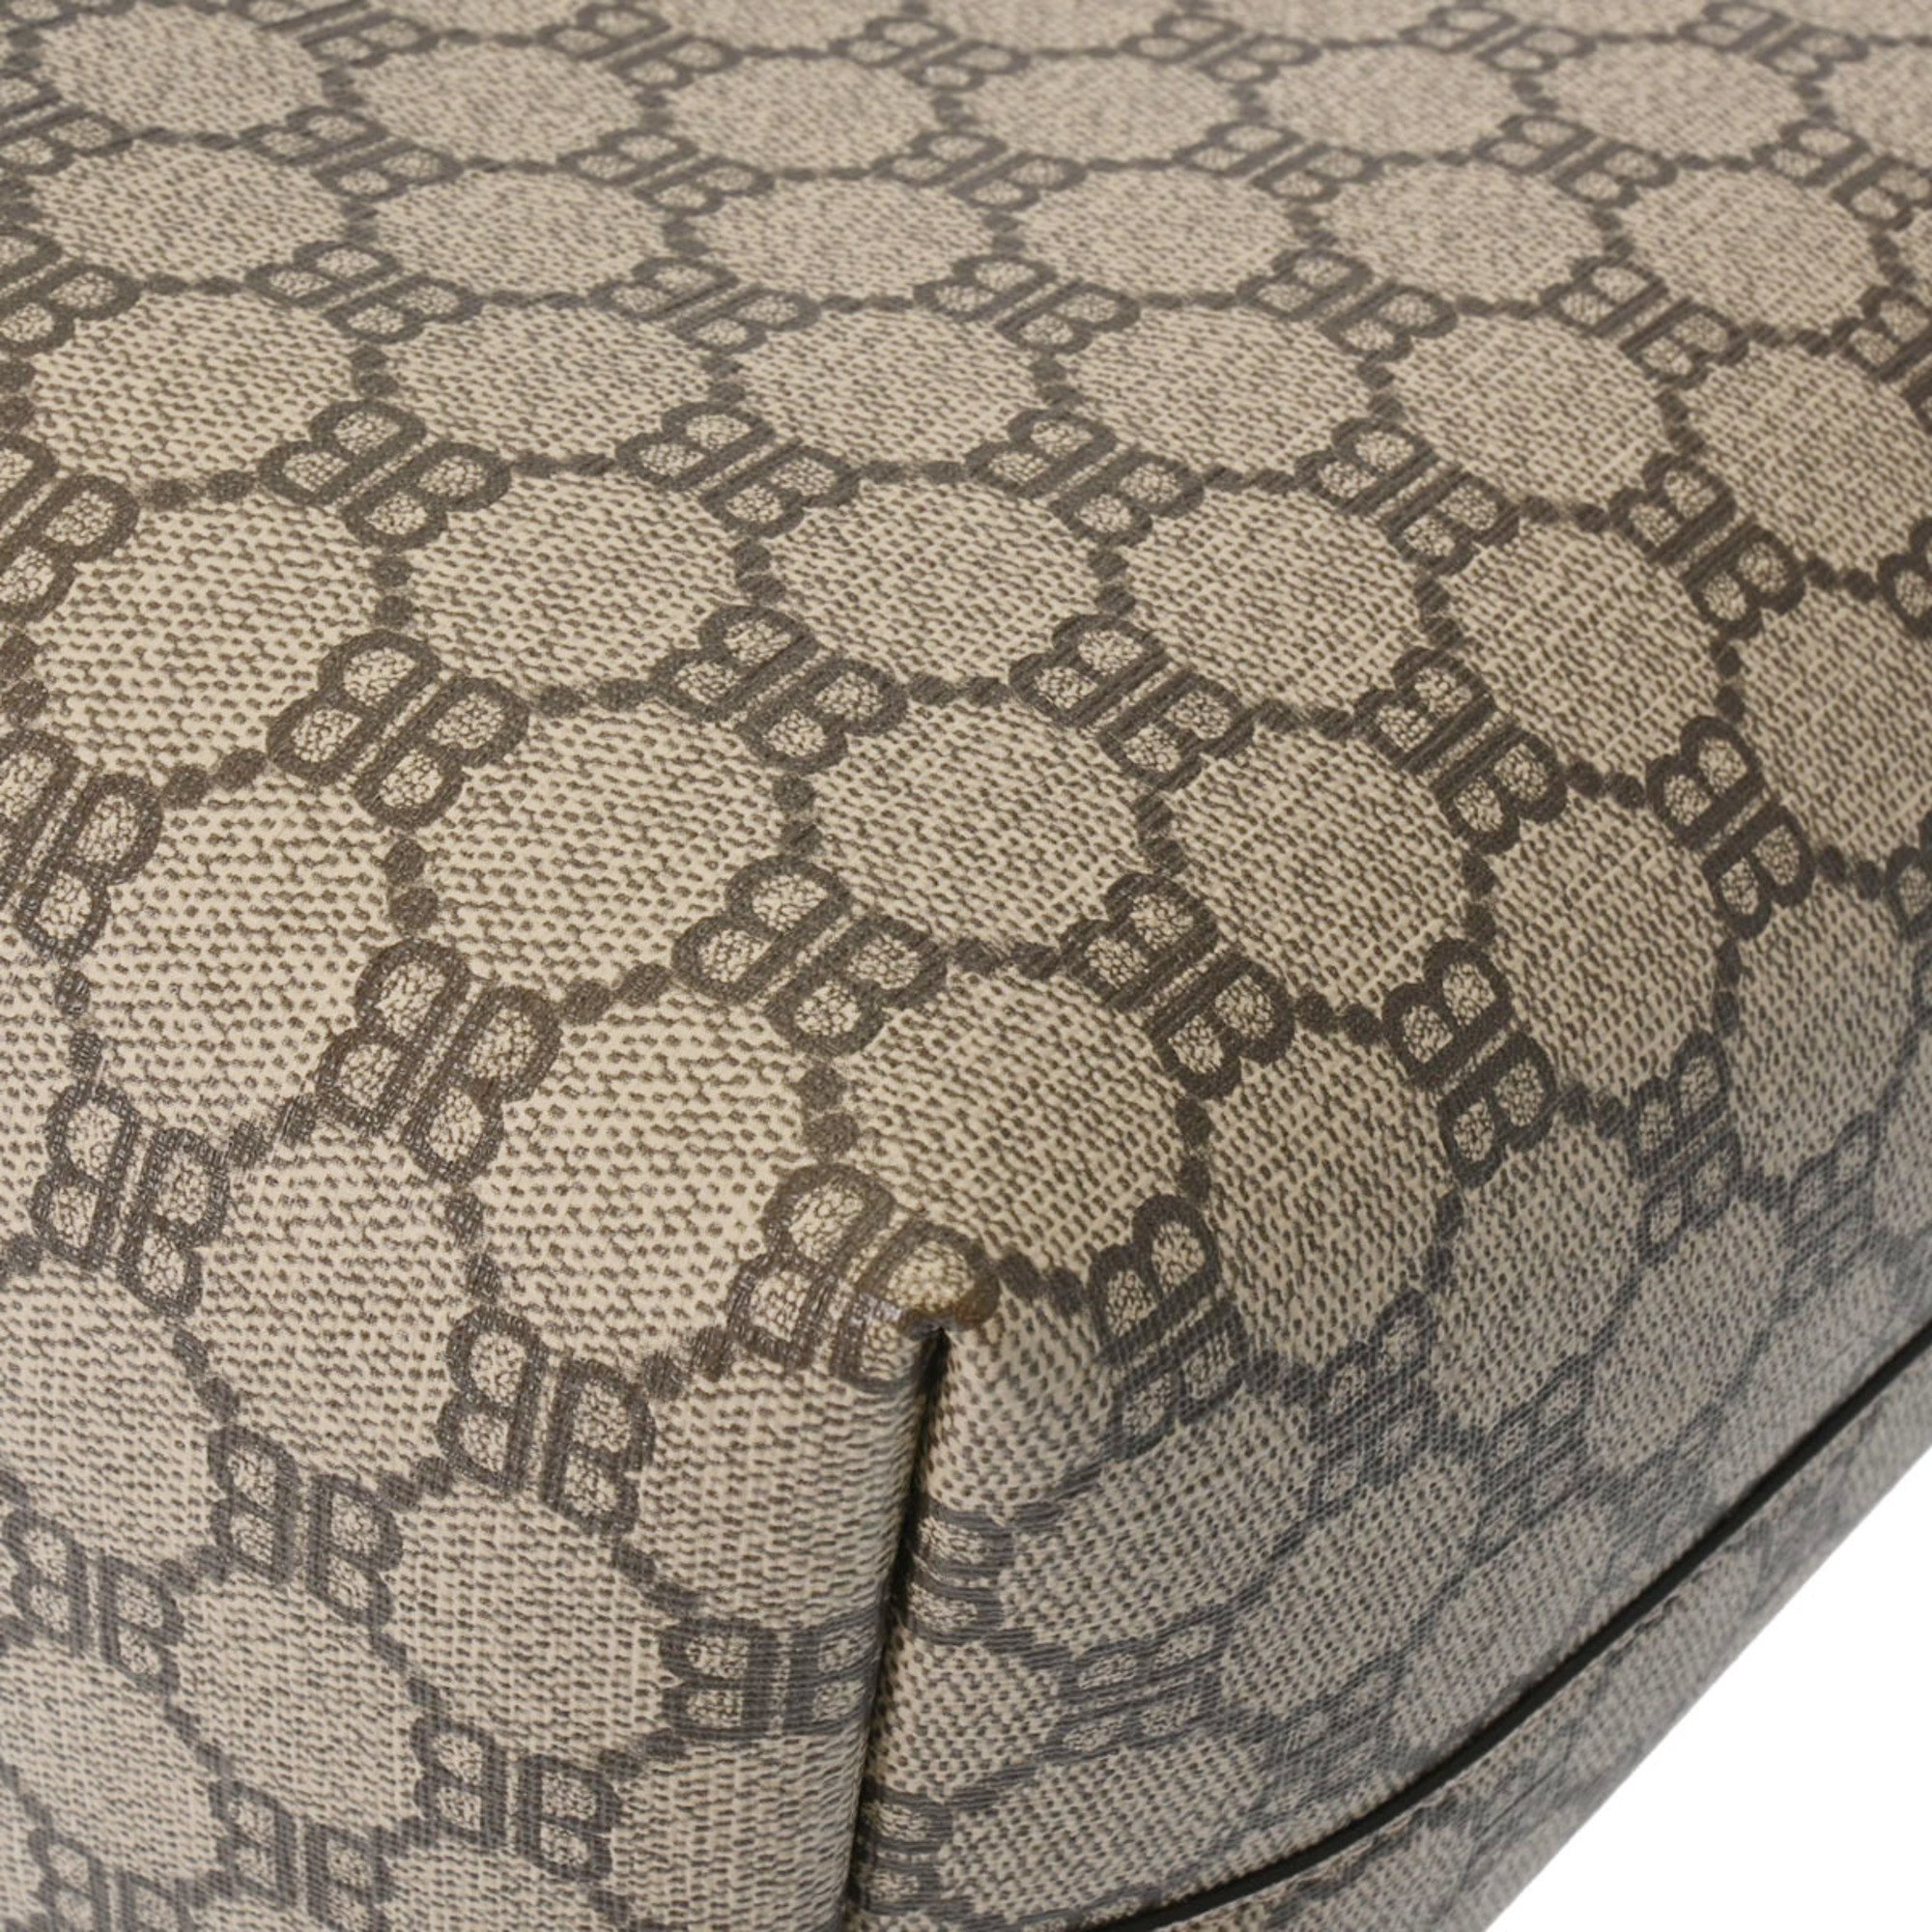 BALENCIAGA Zahacker Medium Tote GUCCI Collaboration Beige 680125 Women's PVC Leather Bag